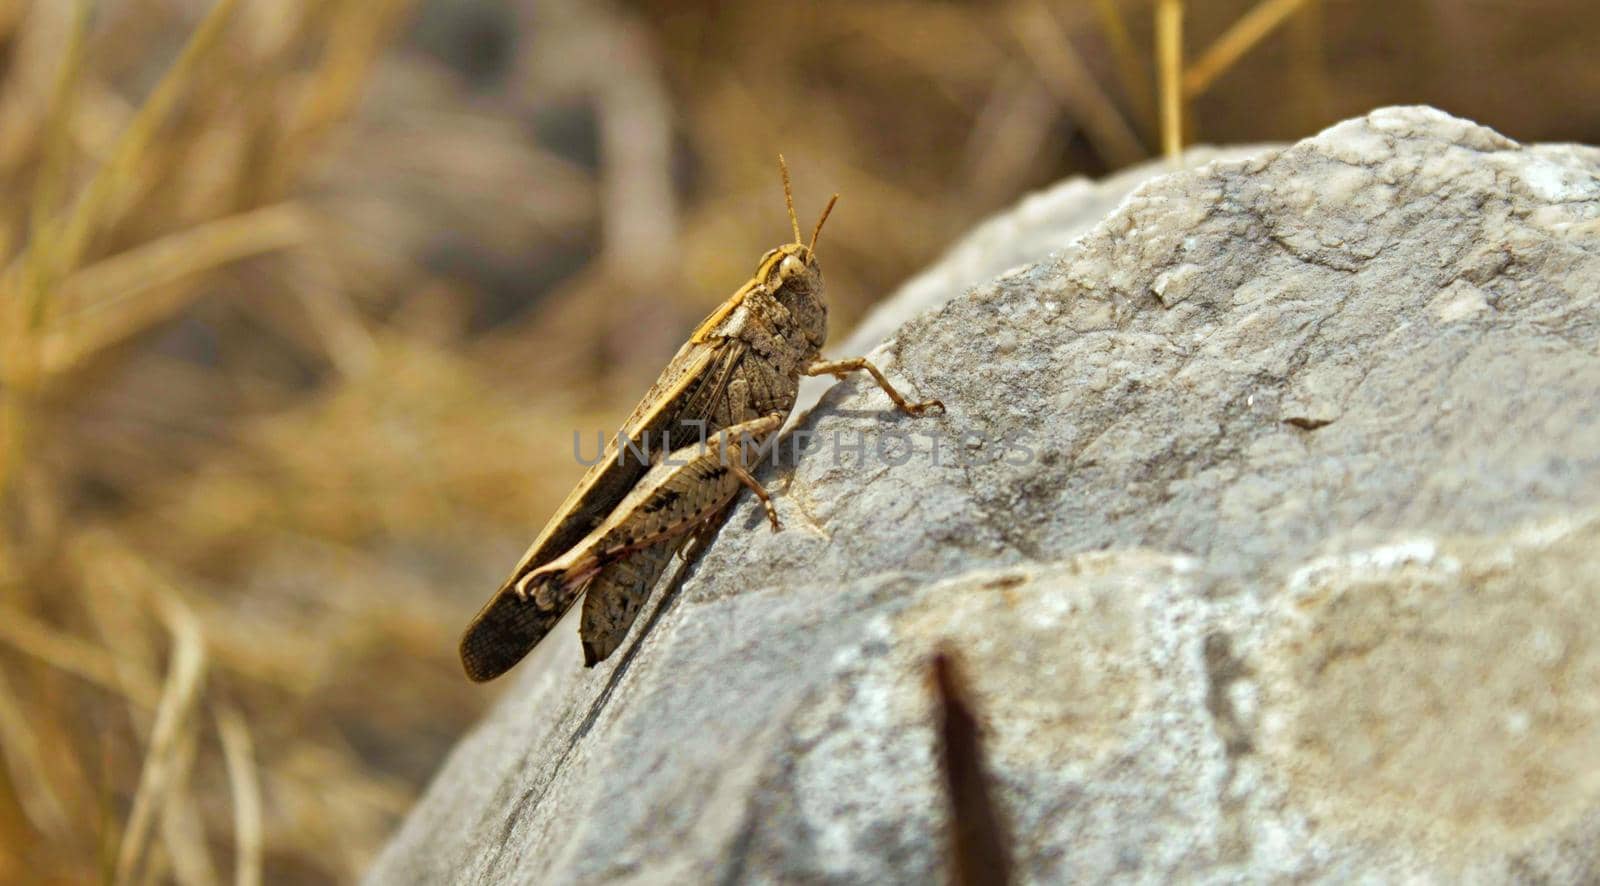 Brown grasshopper resting on a rock on a Mediterranean island by tennesseewitney